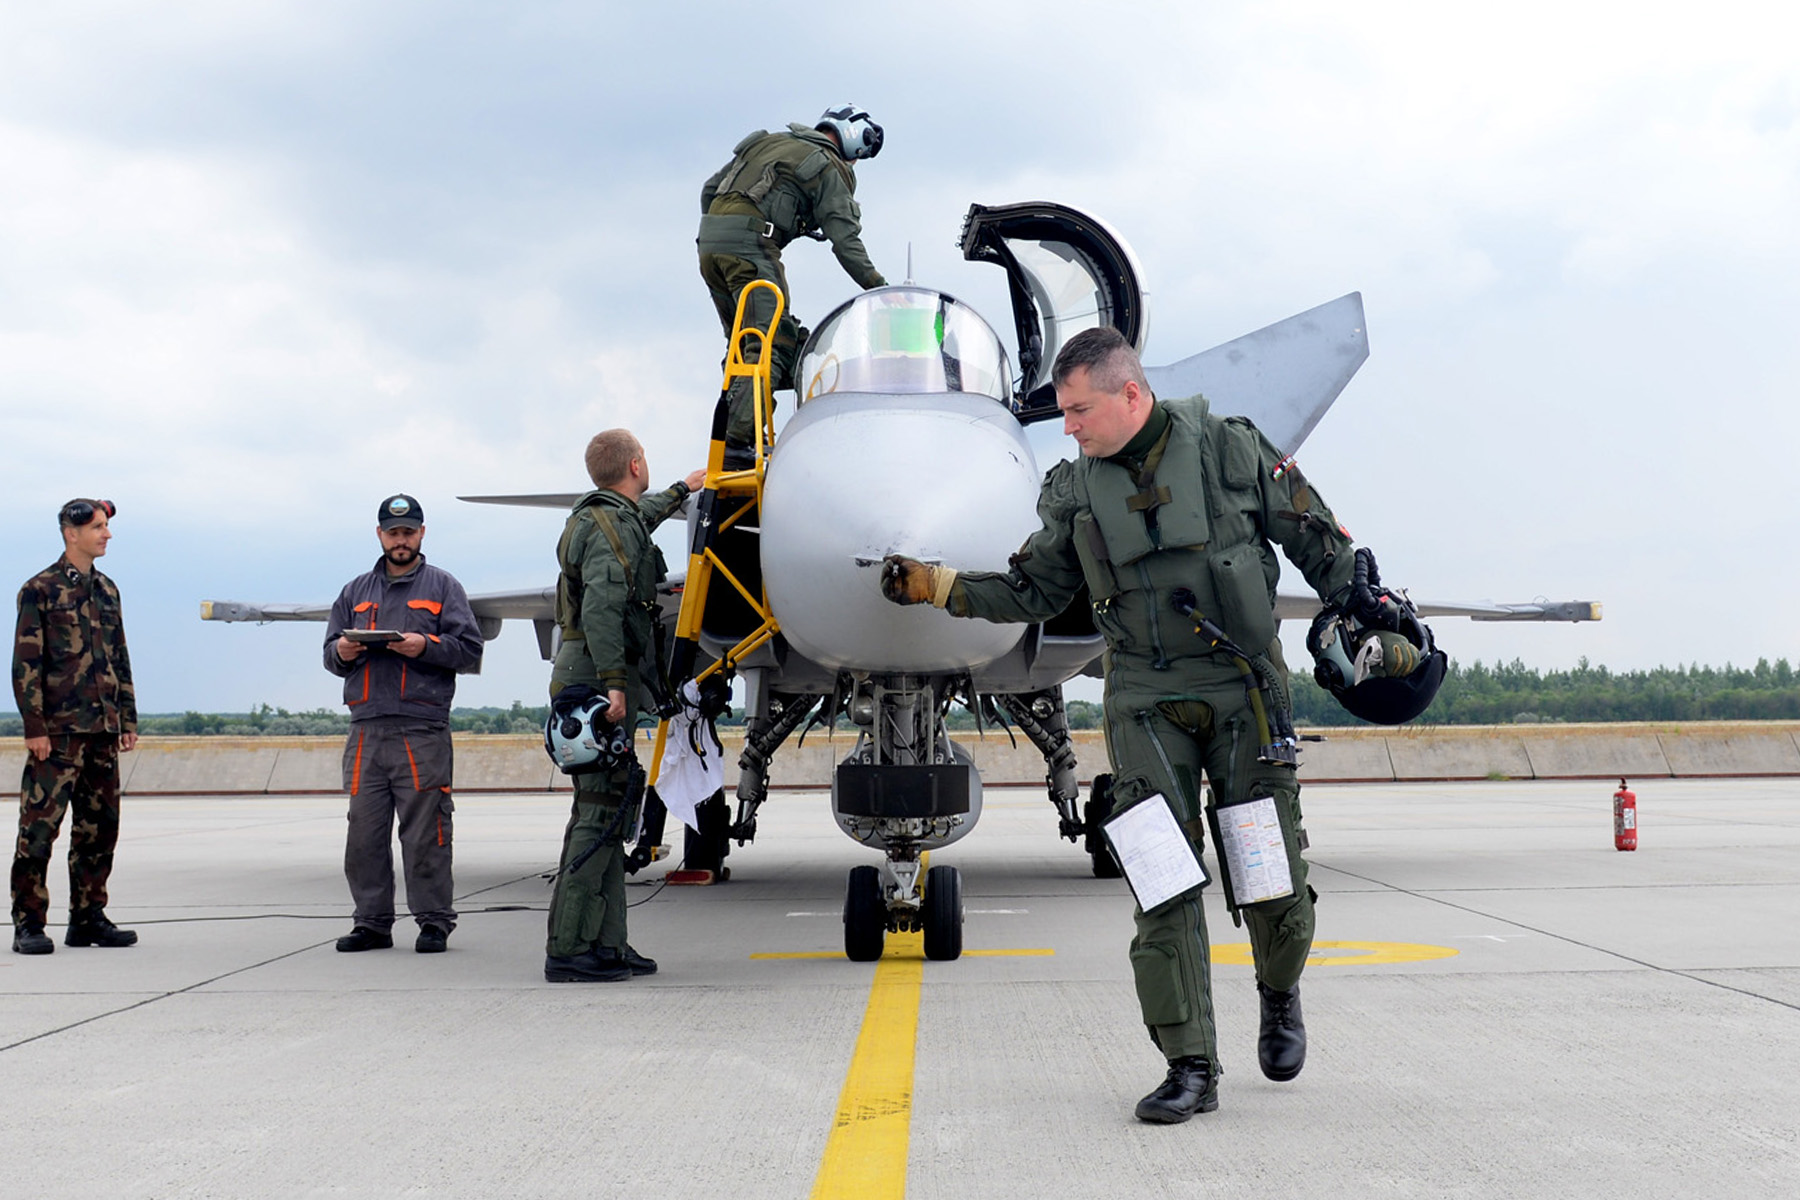 venijn Atlantische Oceaan Genealogie Hungarian air force performs first historic air refueling with help from  NATO ally, partner